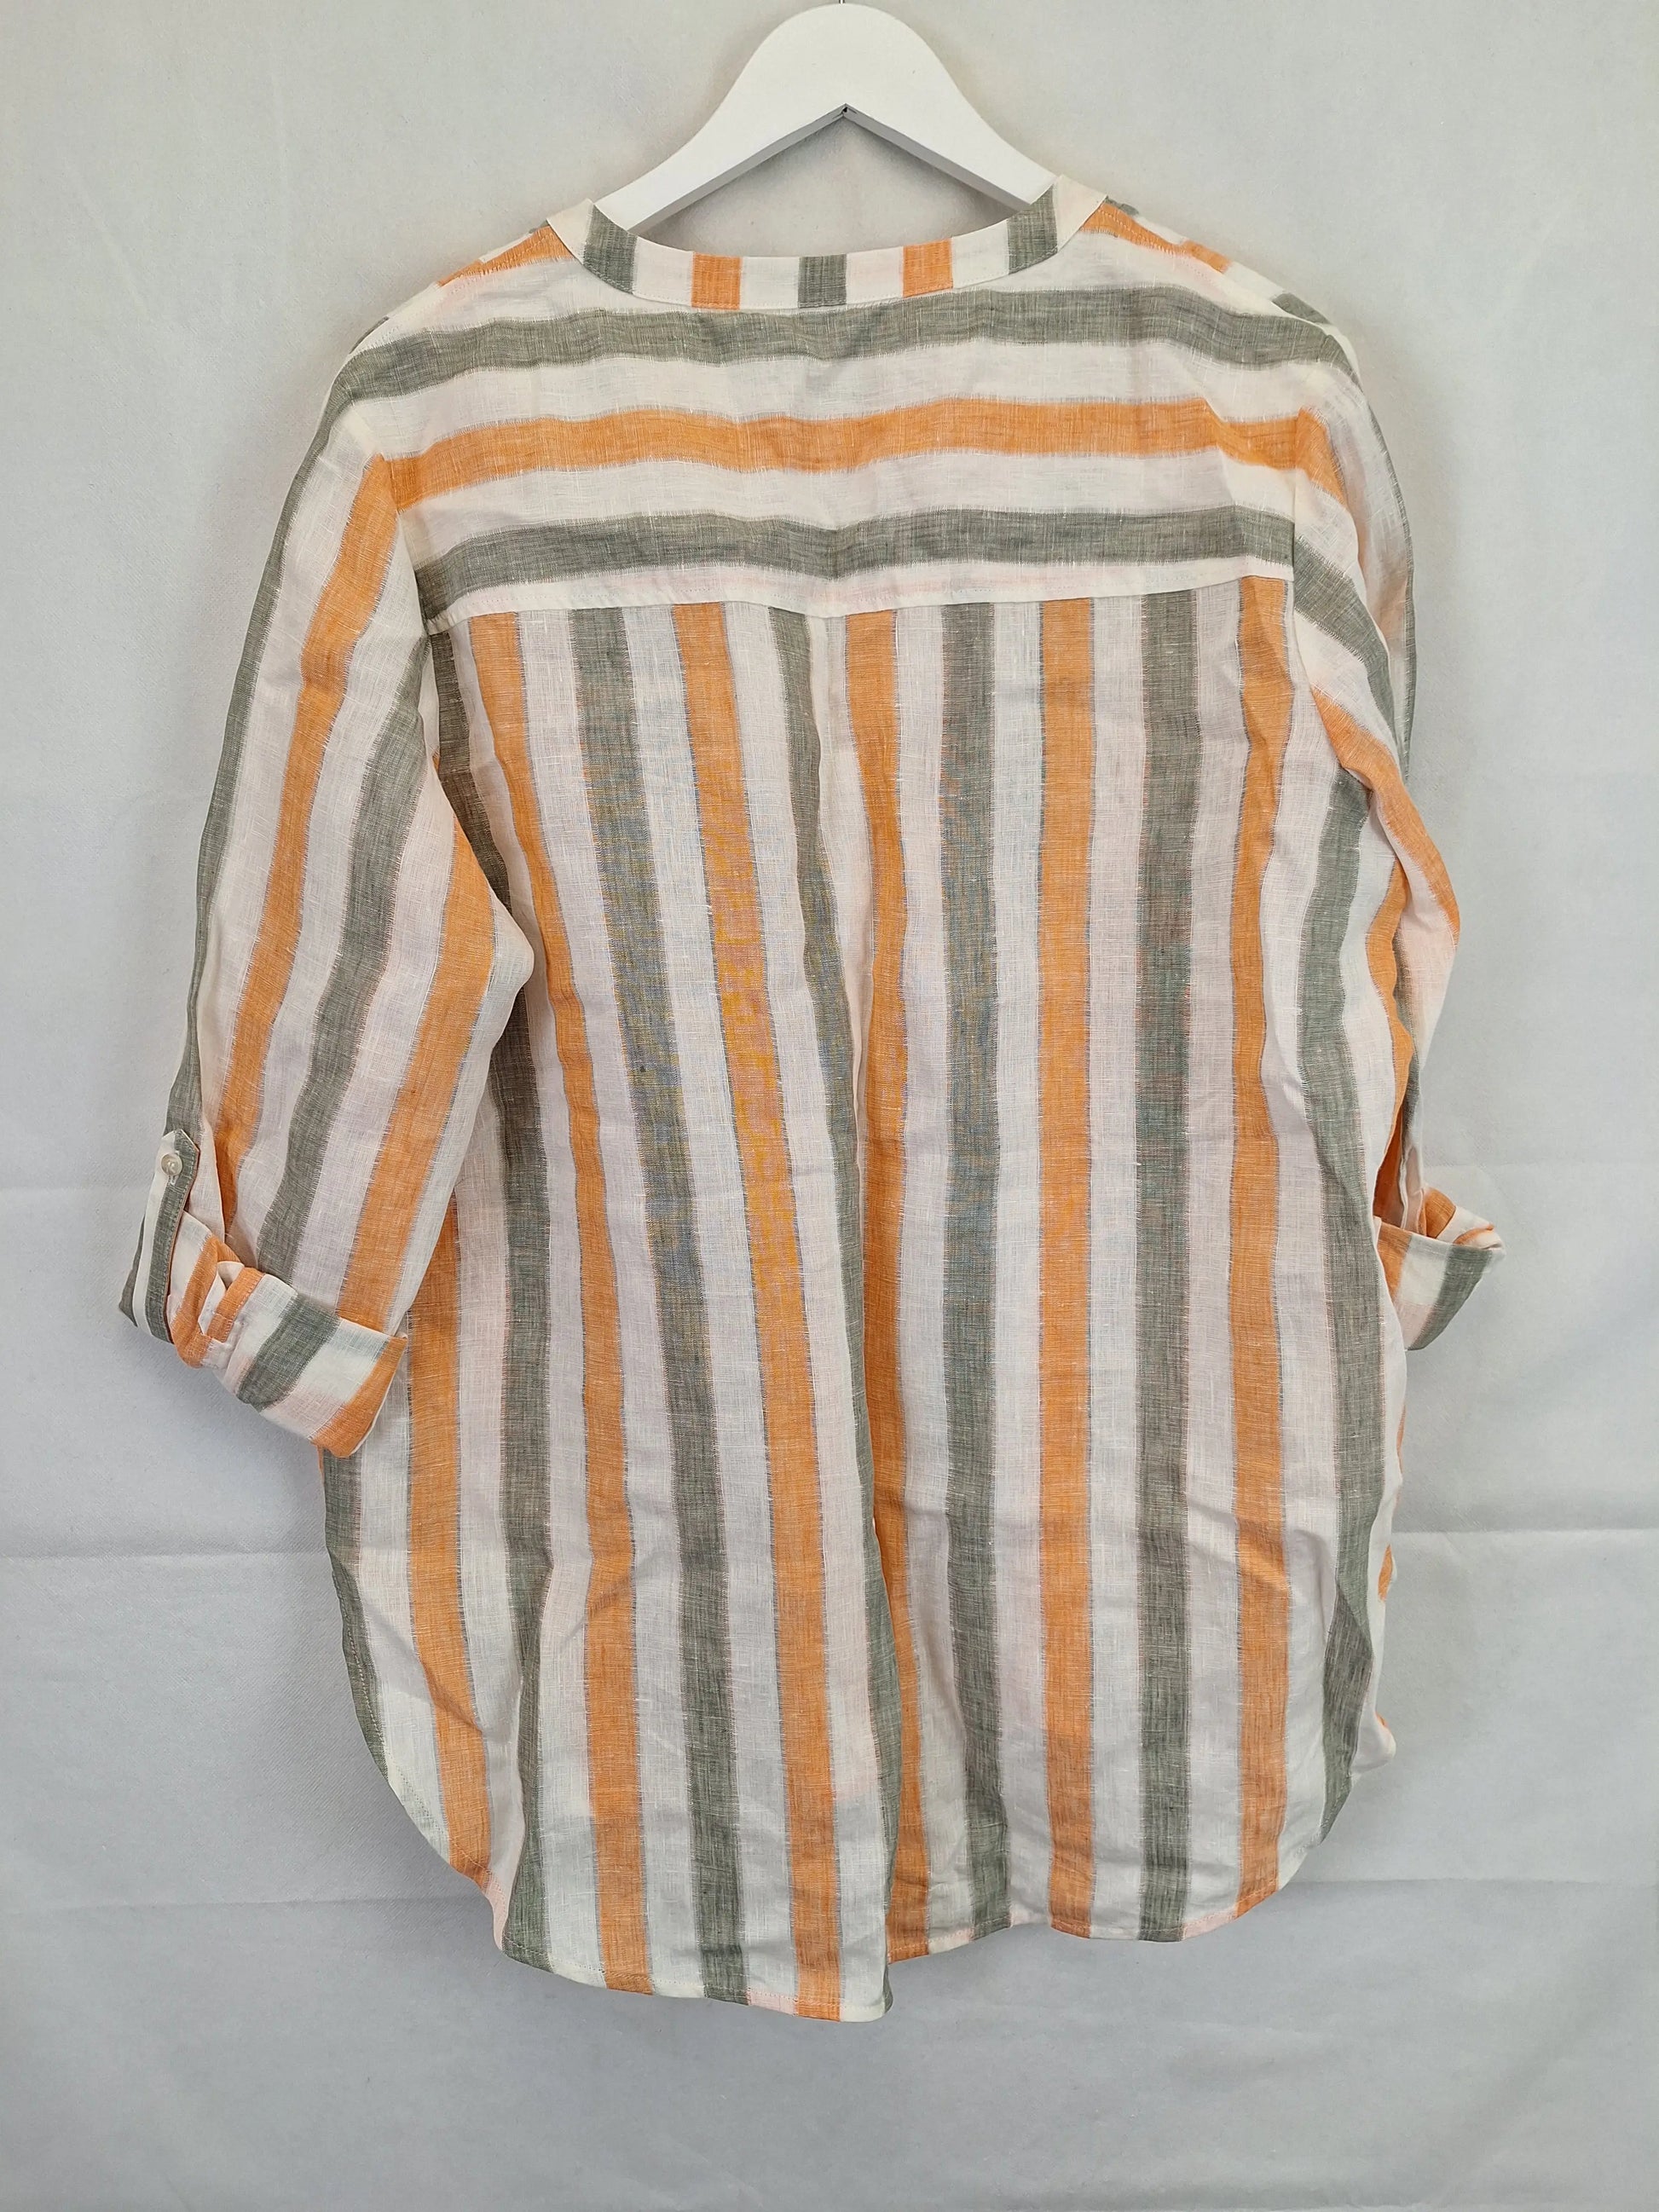 Sportscraft Linen Striped Shirt Top Size 16 by SwapUp-Online Second Hand Store-Online Thrift Store